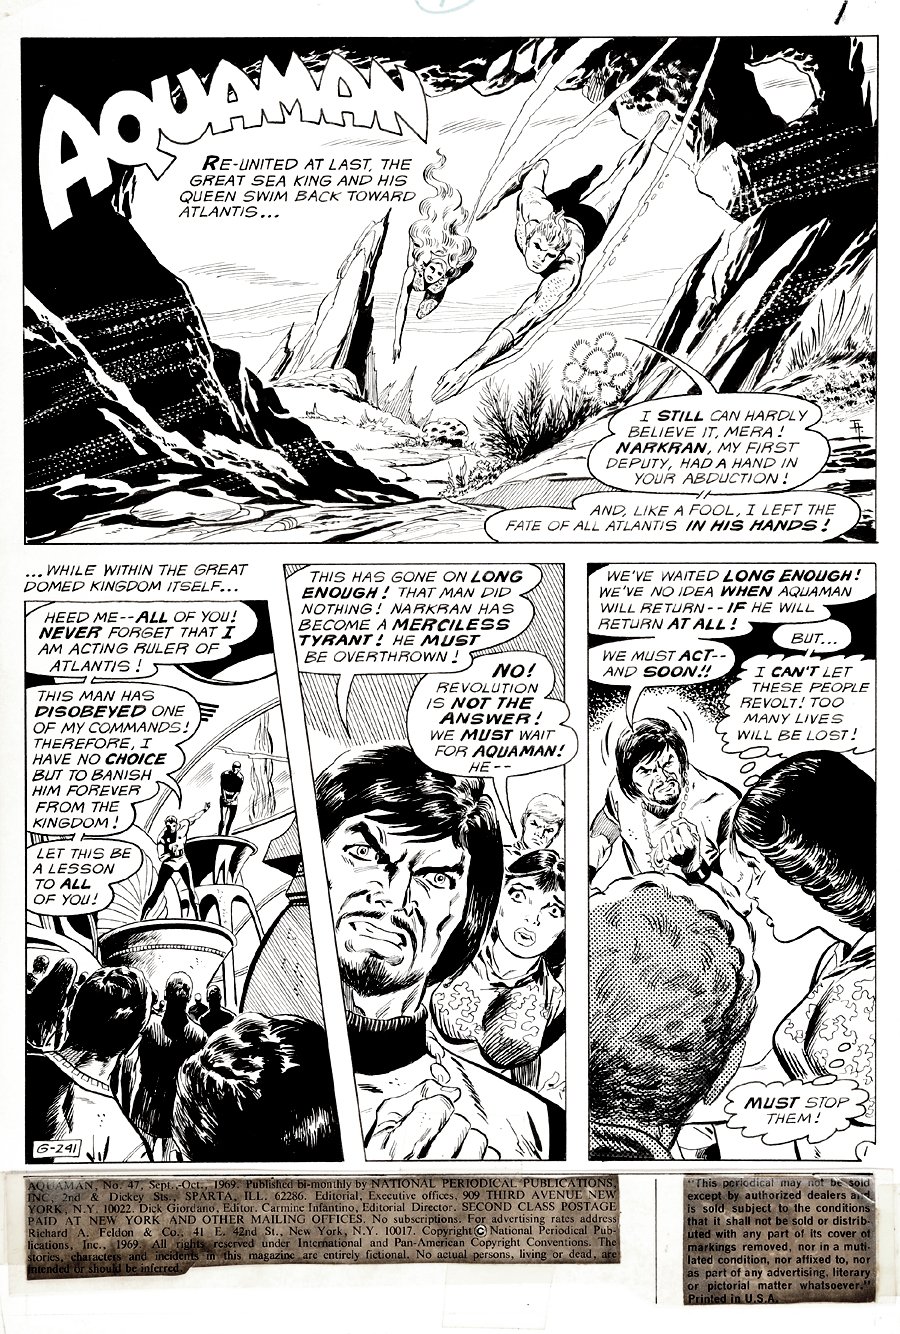 Image of Aquaman #47 p 1 SPLASH (AQUAMAN, MERA, AQUAGIRL!) 1969